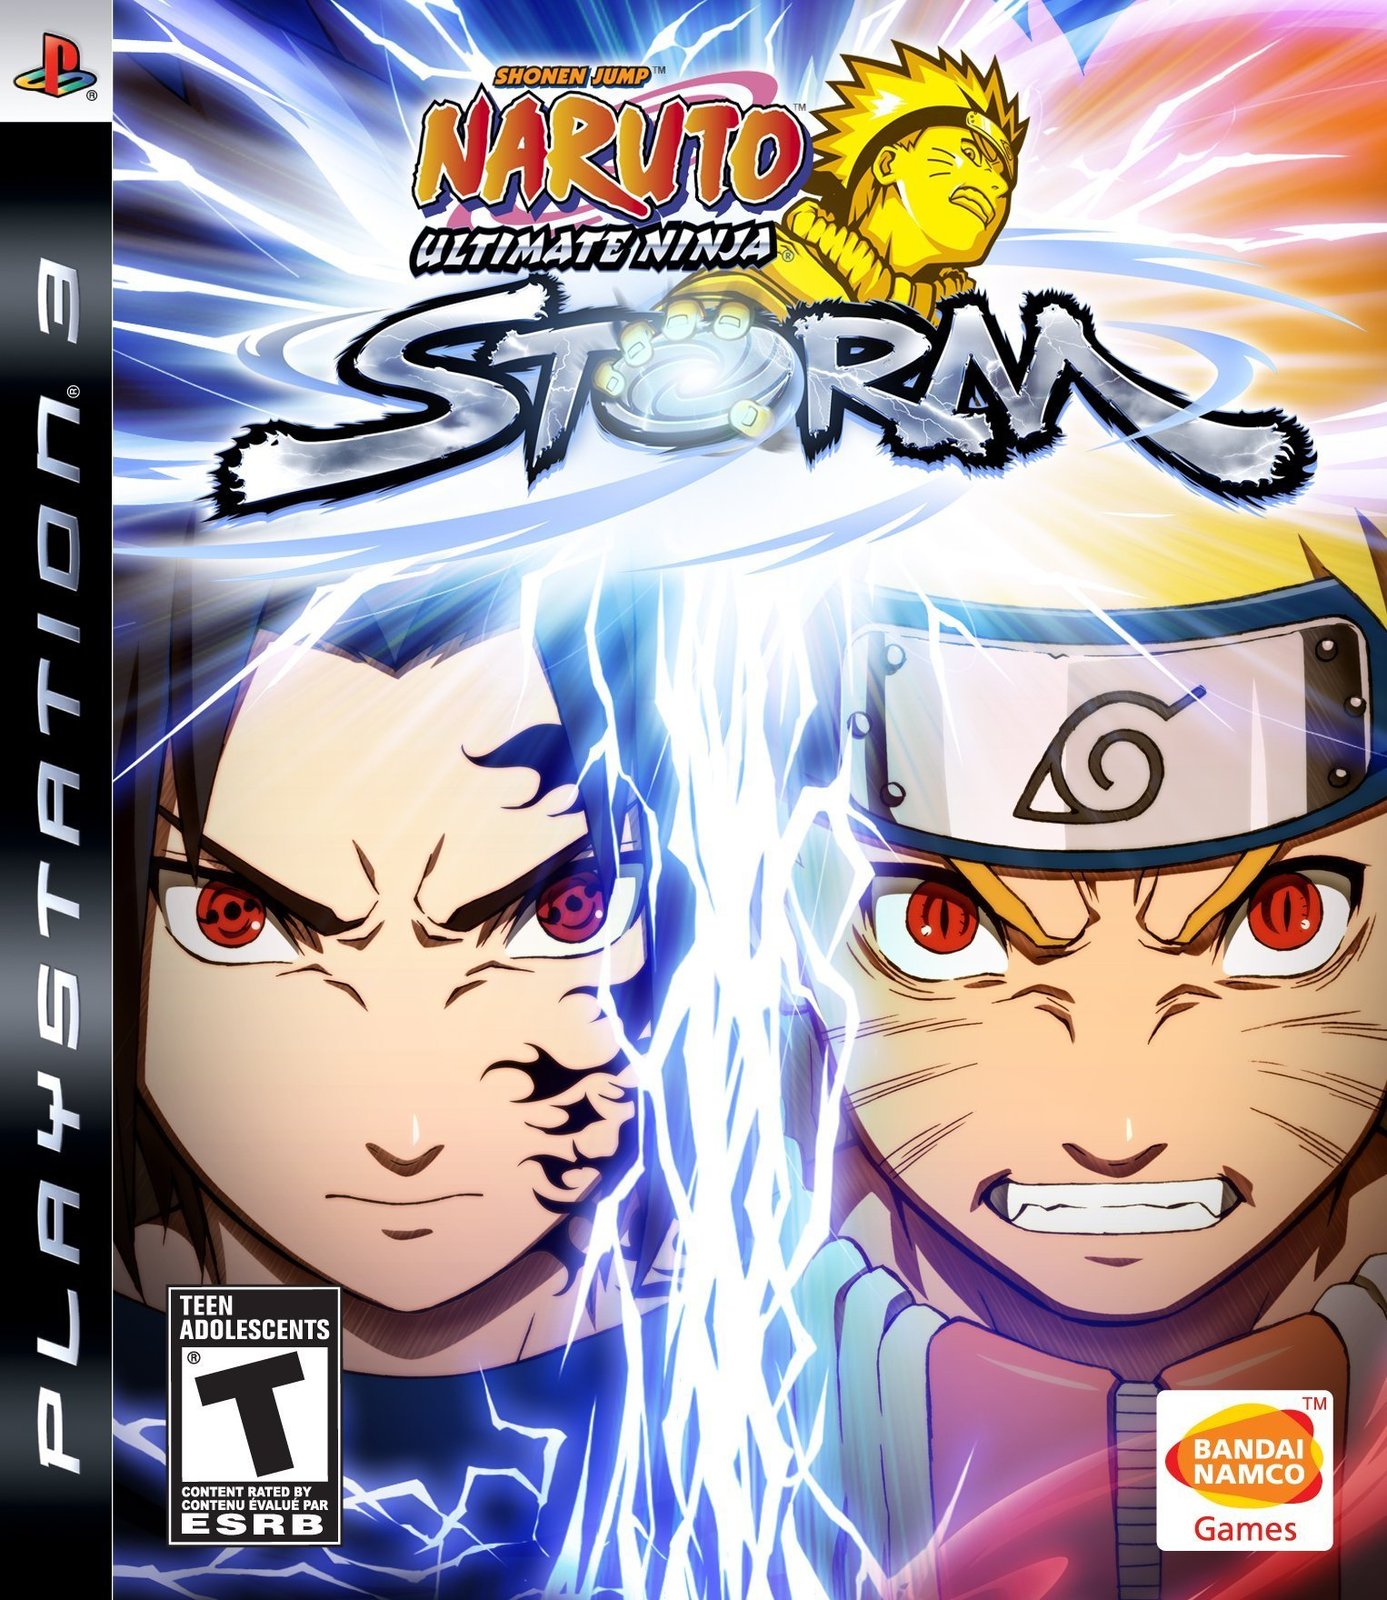 Naruto: Ultimate Ninja Storm - Narutopedia - Wikia